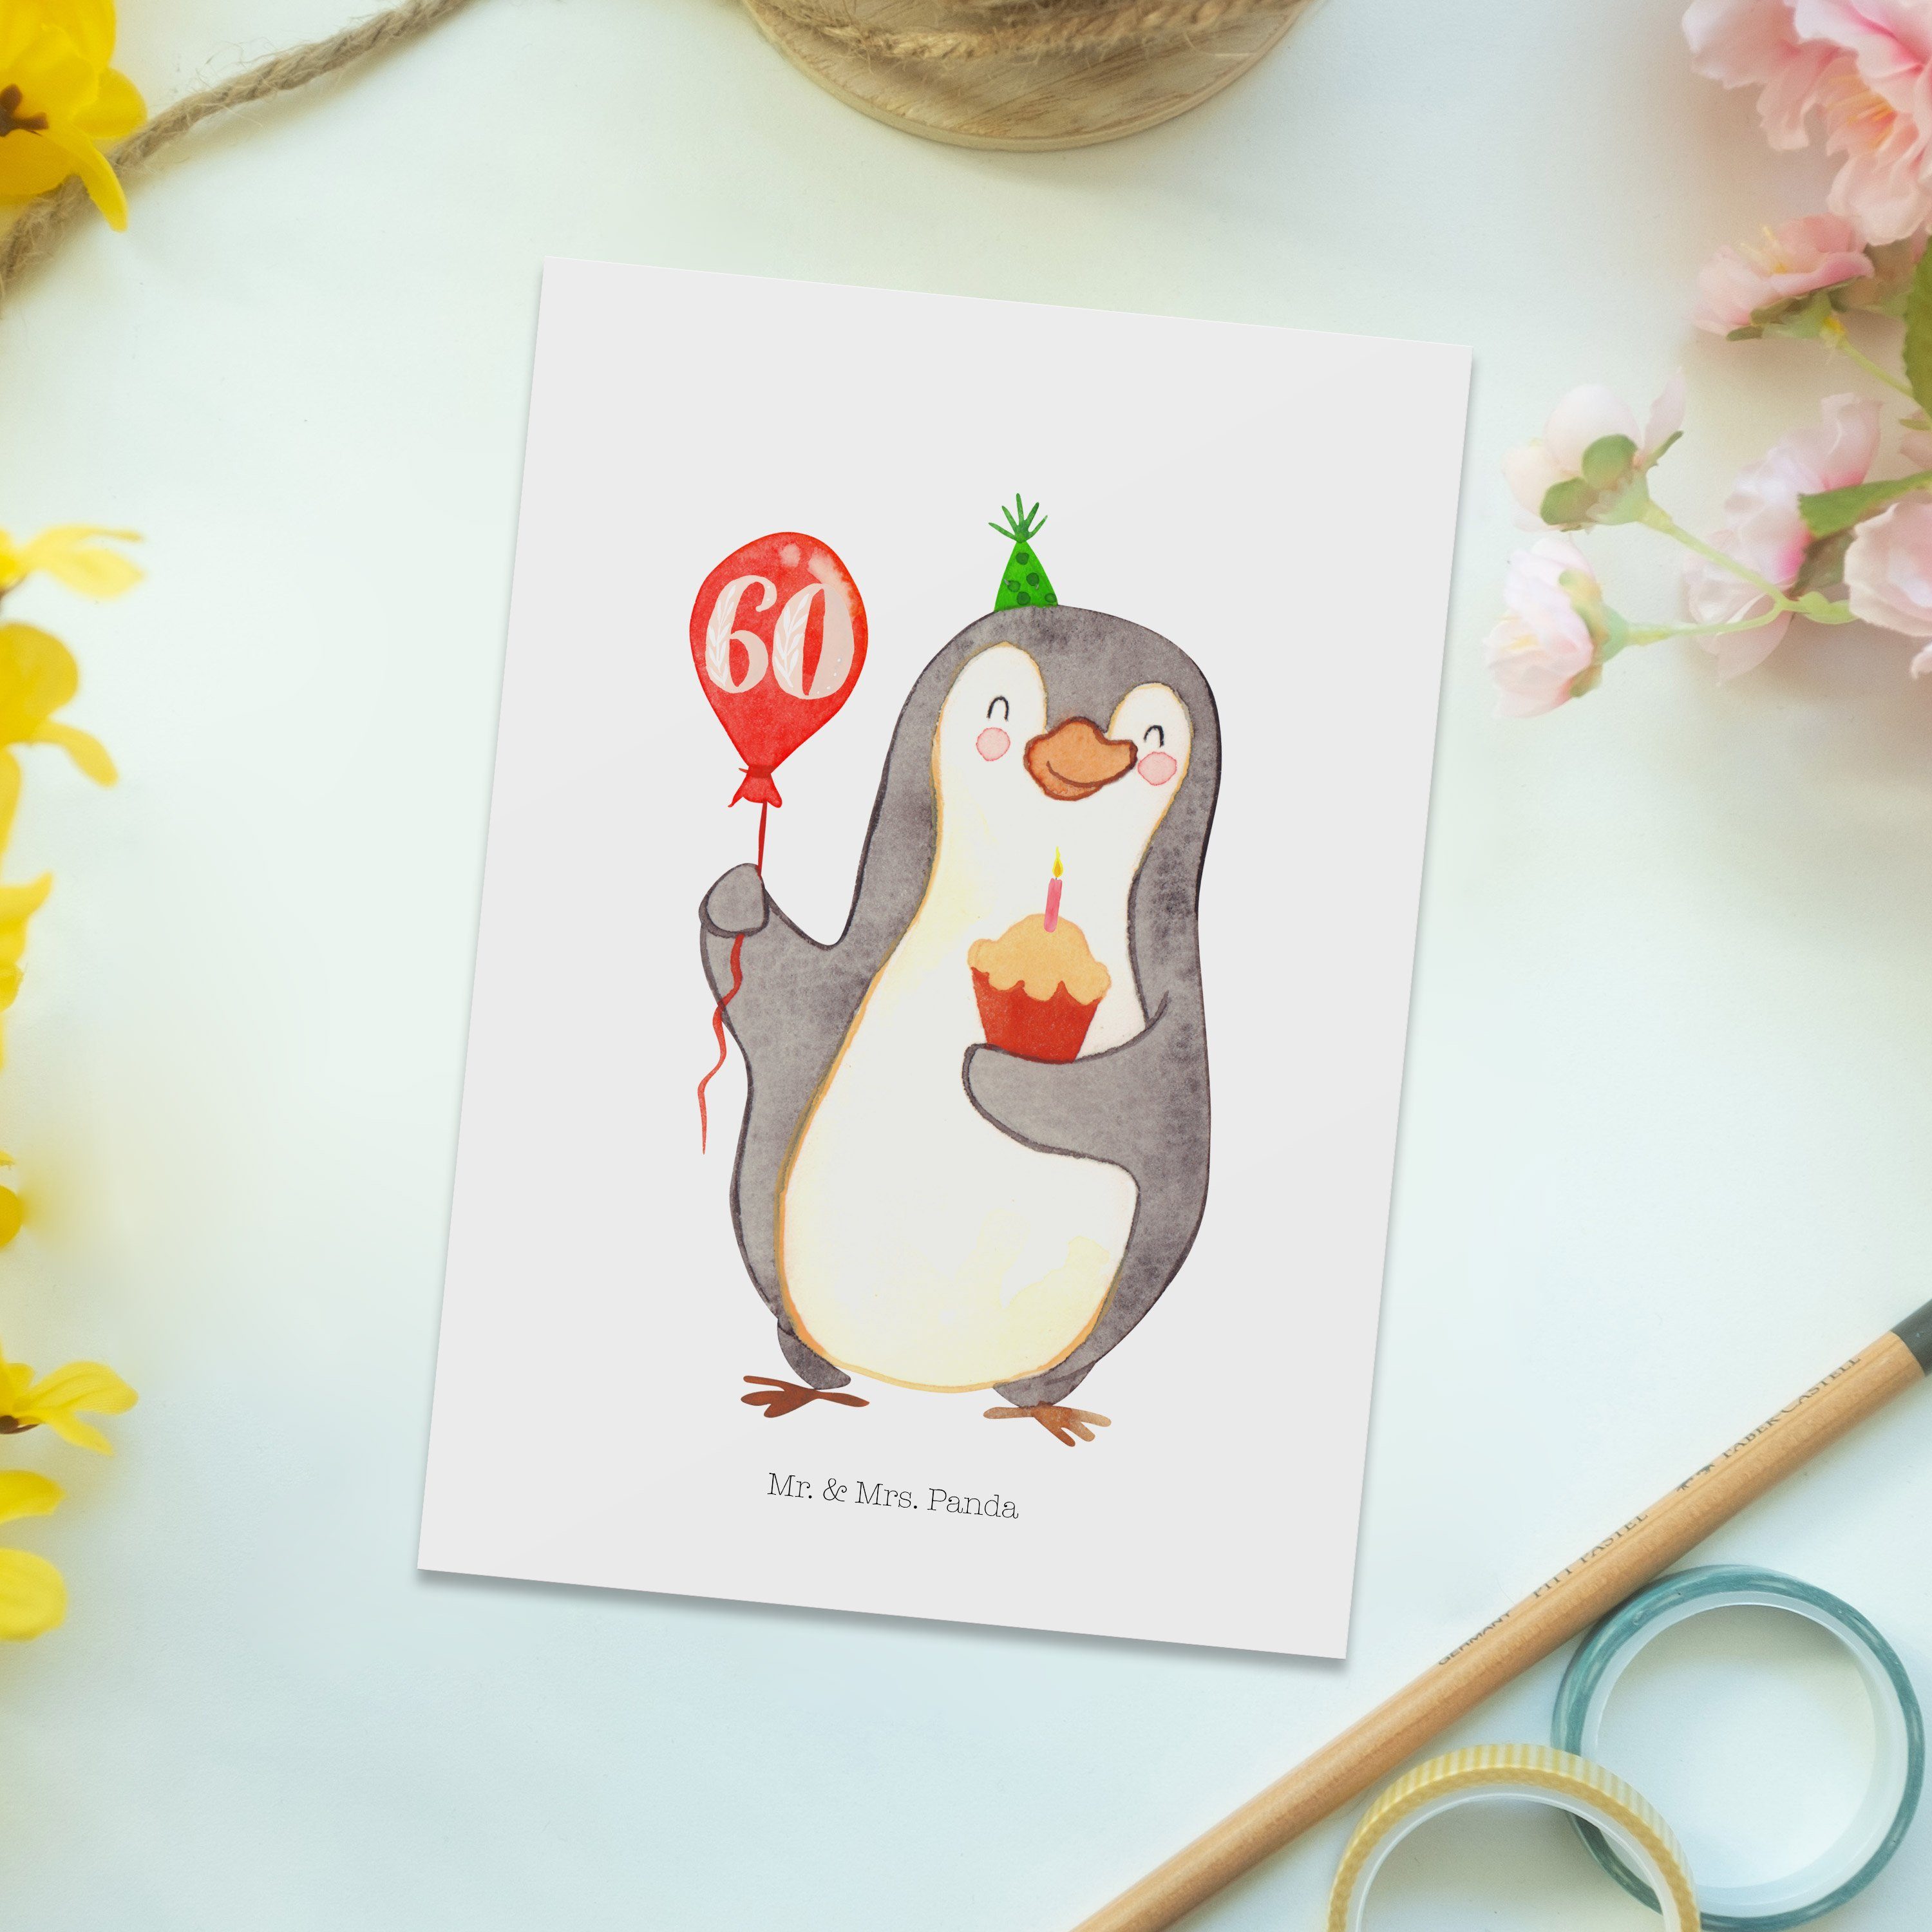 Mr. & Mrs. Luftballon Panda - Dankeskar Geburtstag Geschenk, Postkarte Party, Weiß 60. Pinguin 